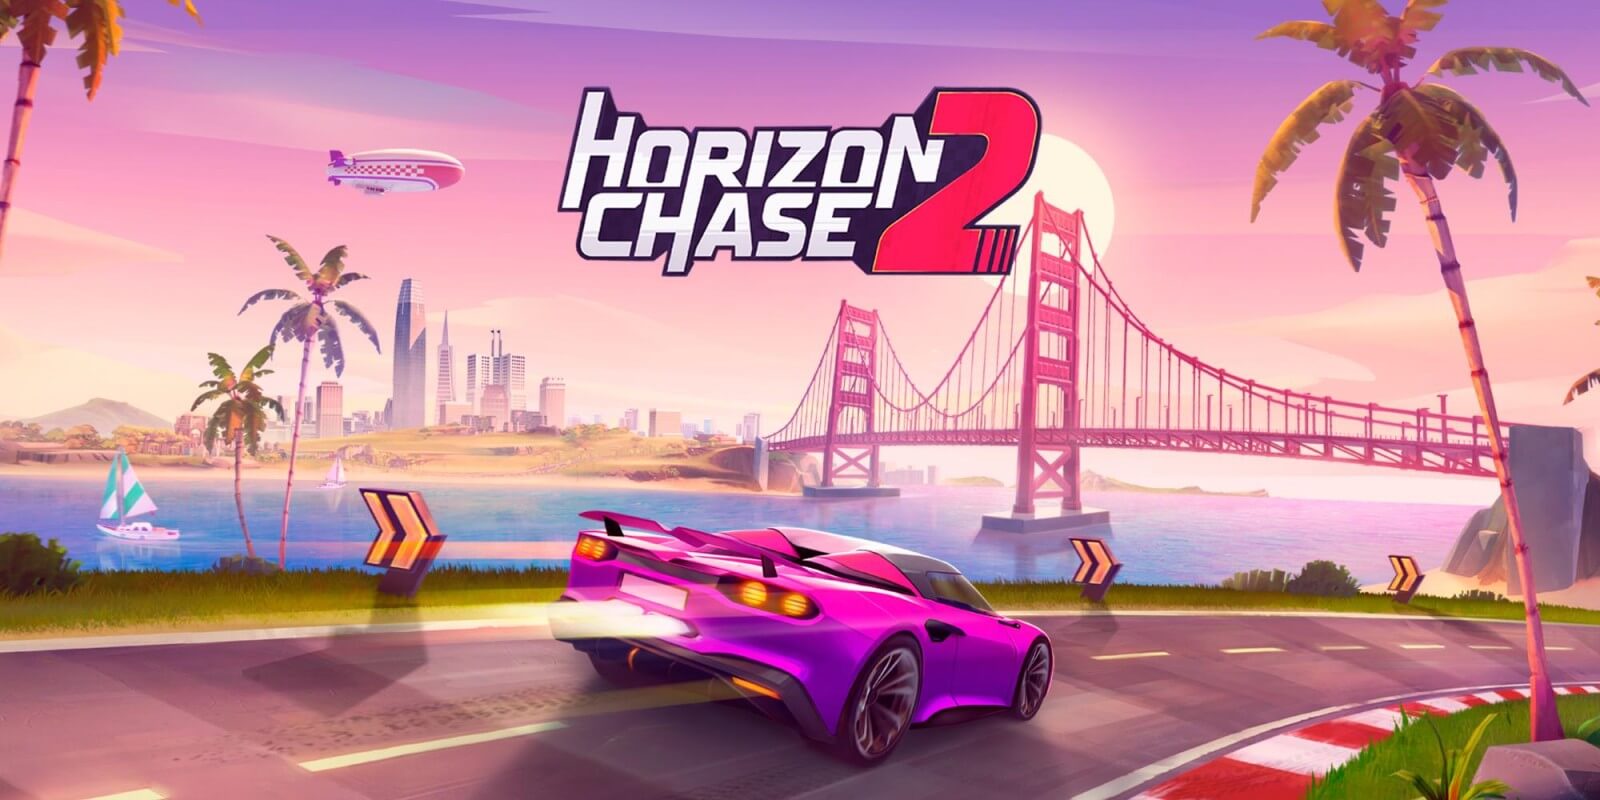 Horizon Chase 2 Banner Image